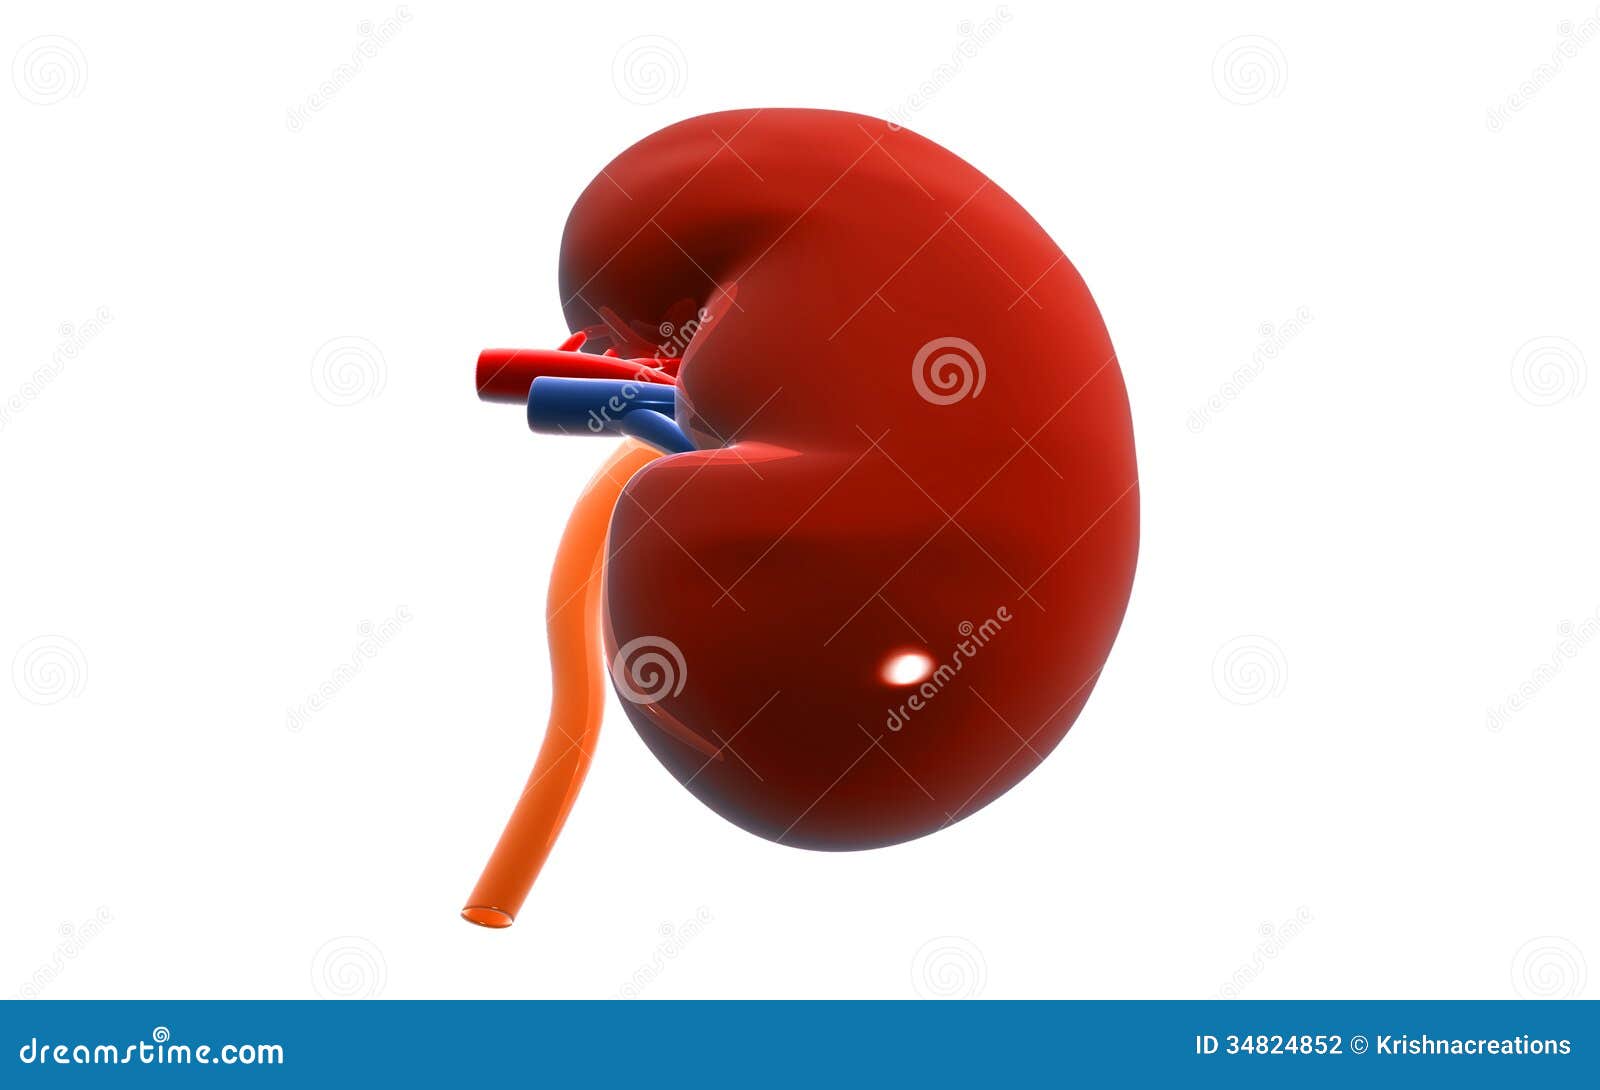 Kidney stock illustration. Illustration of organ, technology - 34824852